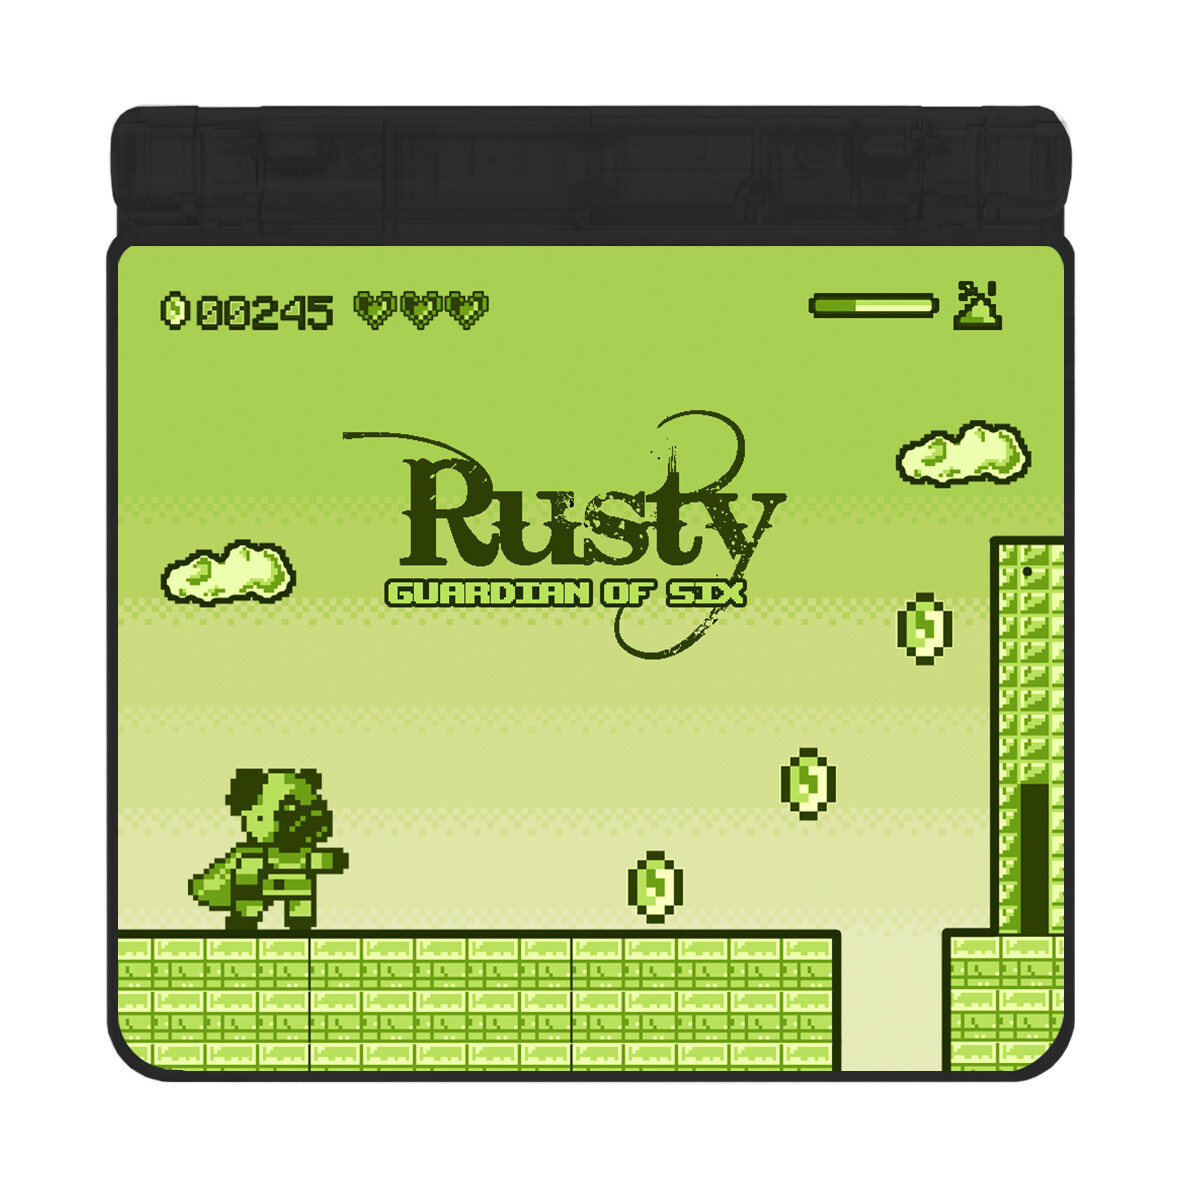 Game Boy Advance SP Console: Prestige Edition (Rusty)